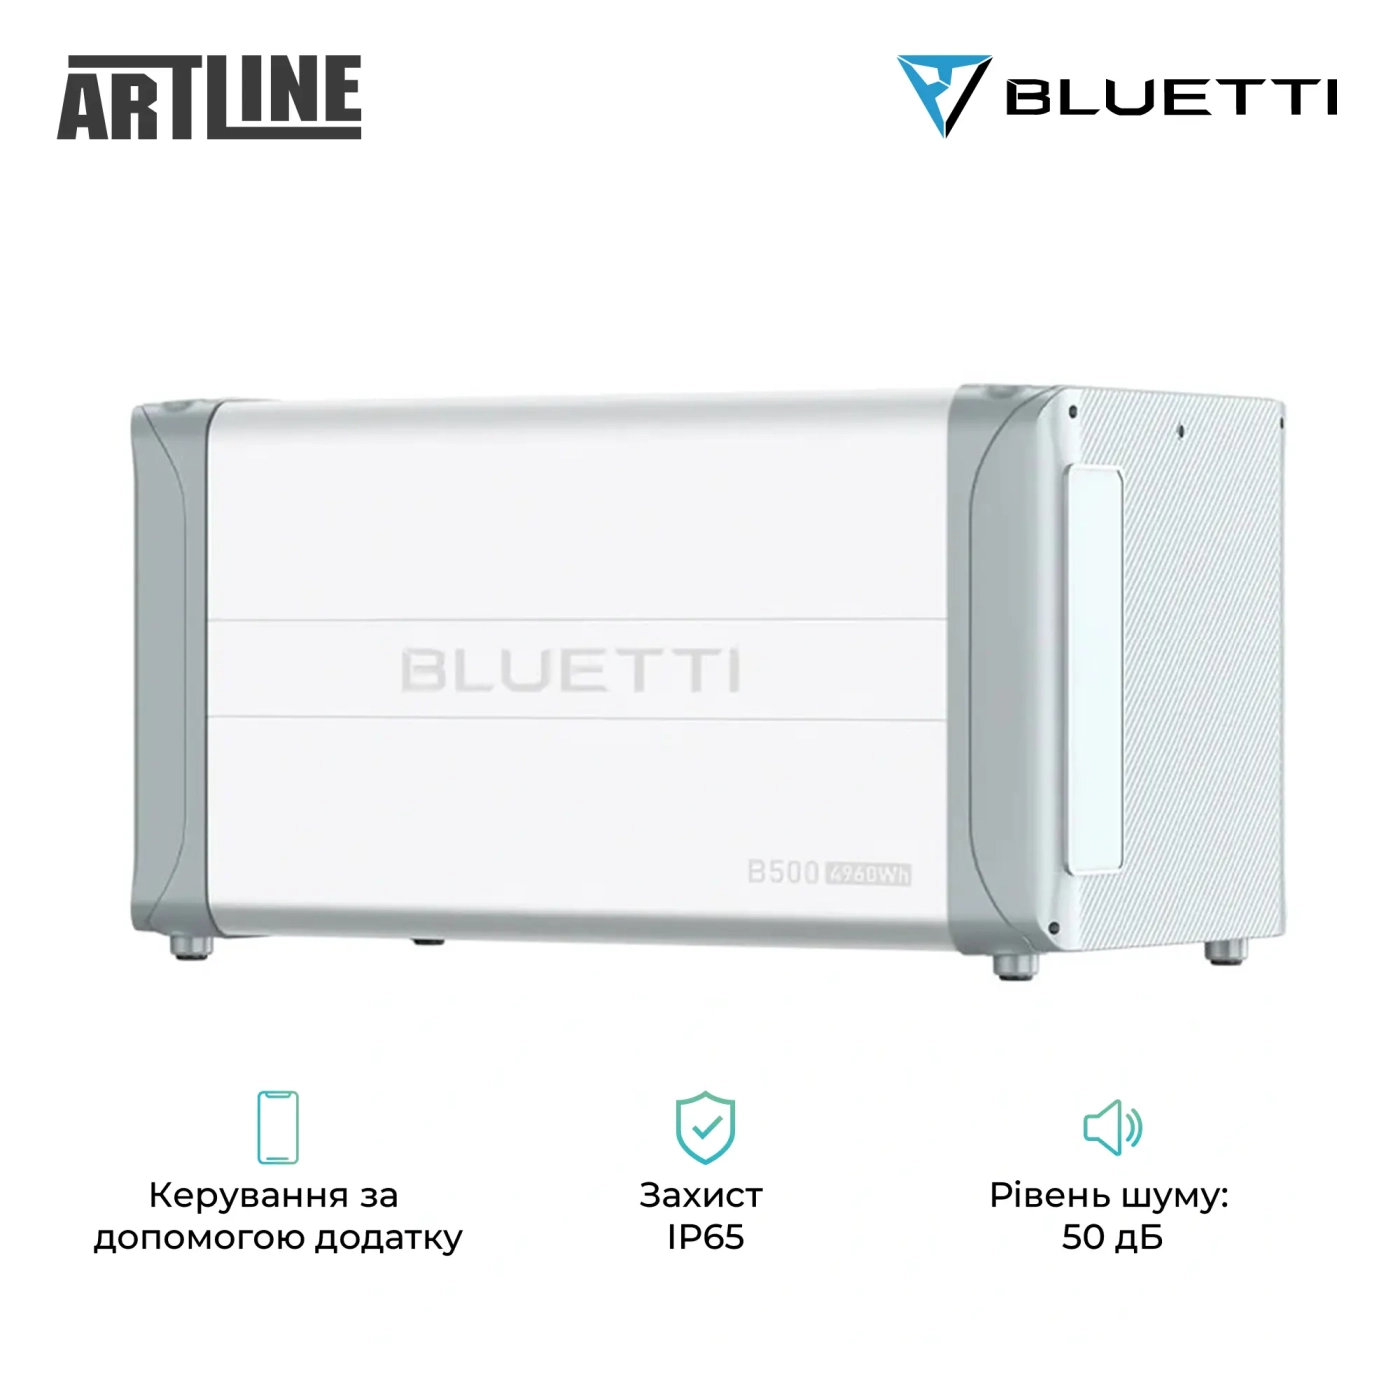 Купить Система хранения энергии Bluetti EP600+3xB500 6000W 14880Wh (EP600+3xB500) - фото 4